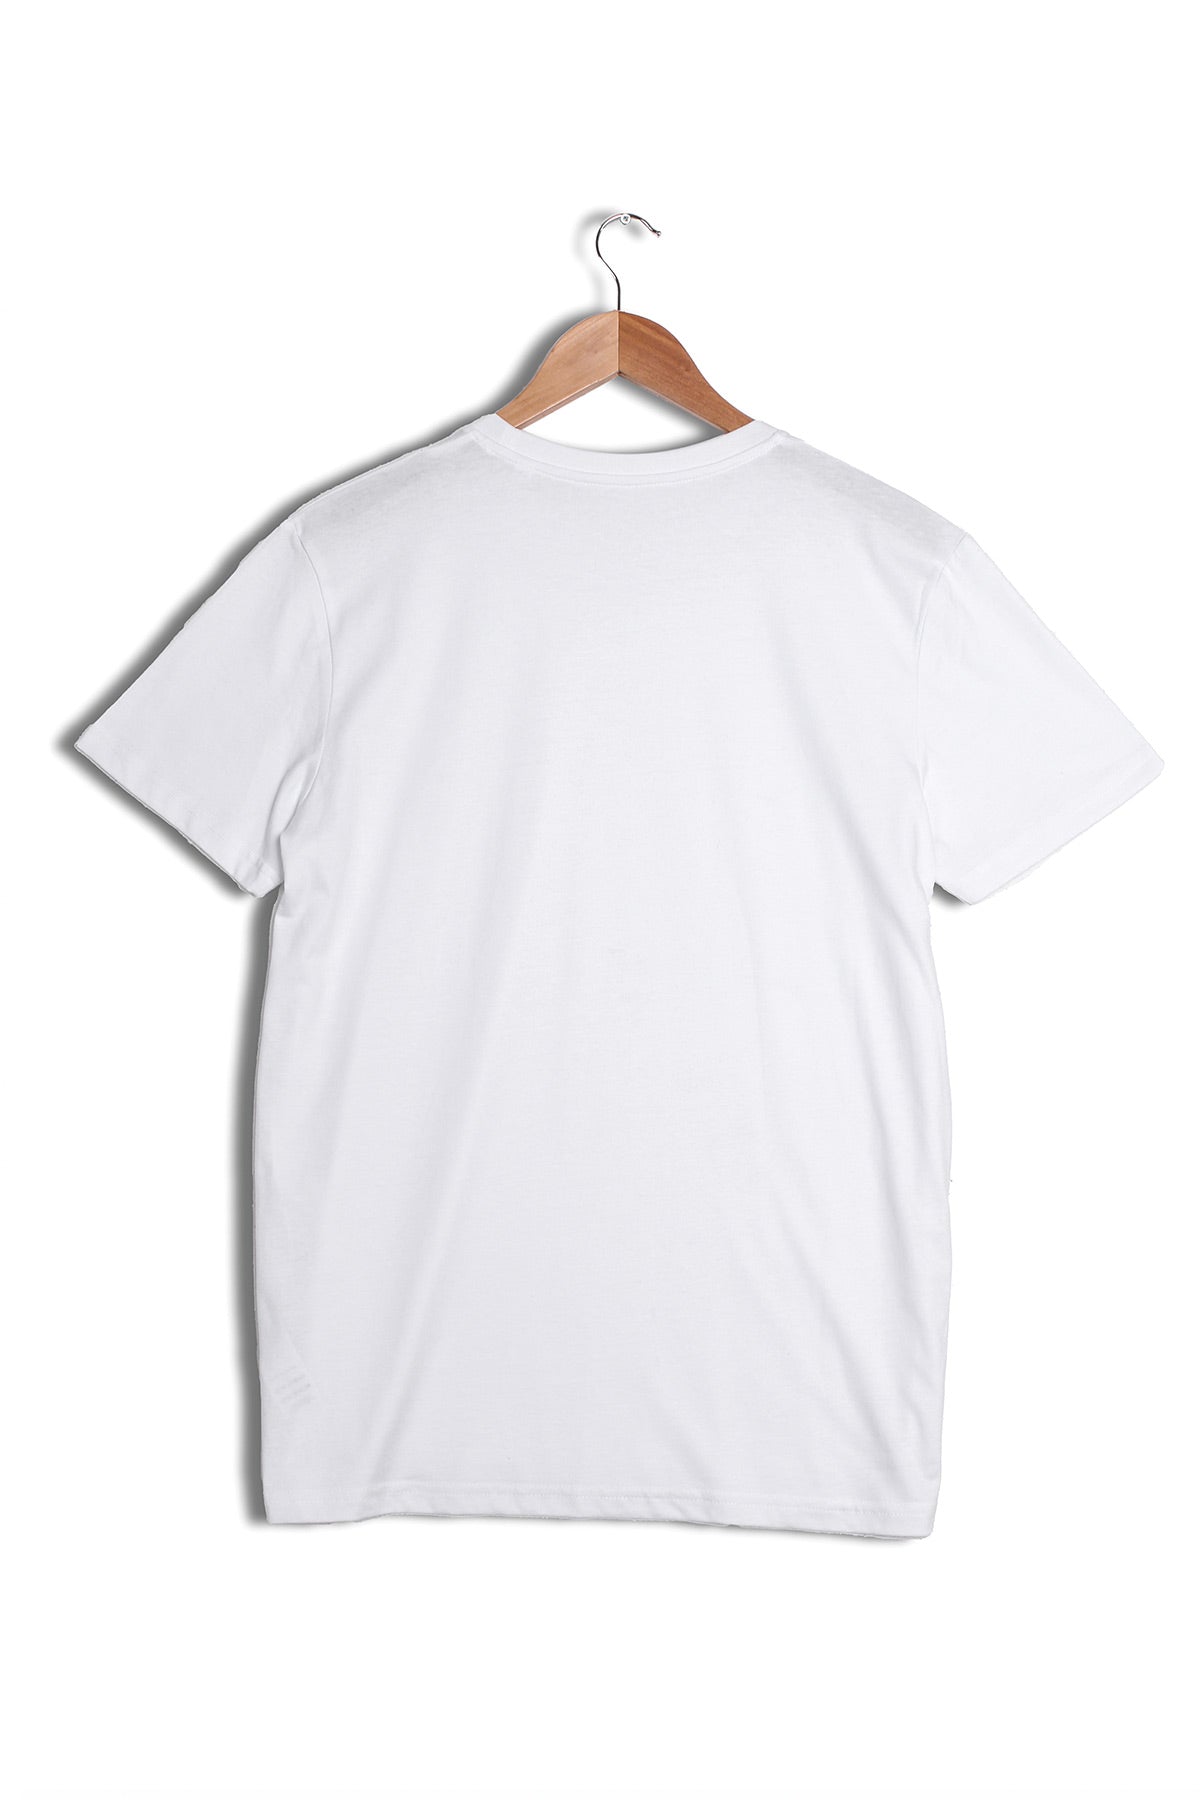 Seconds & Samples - Men's White Organic Cotton T-Shirt